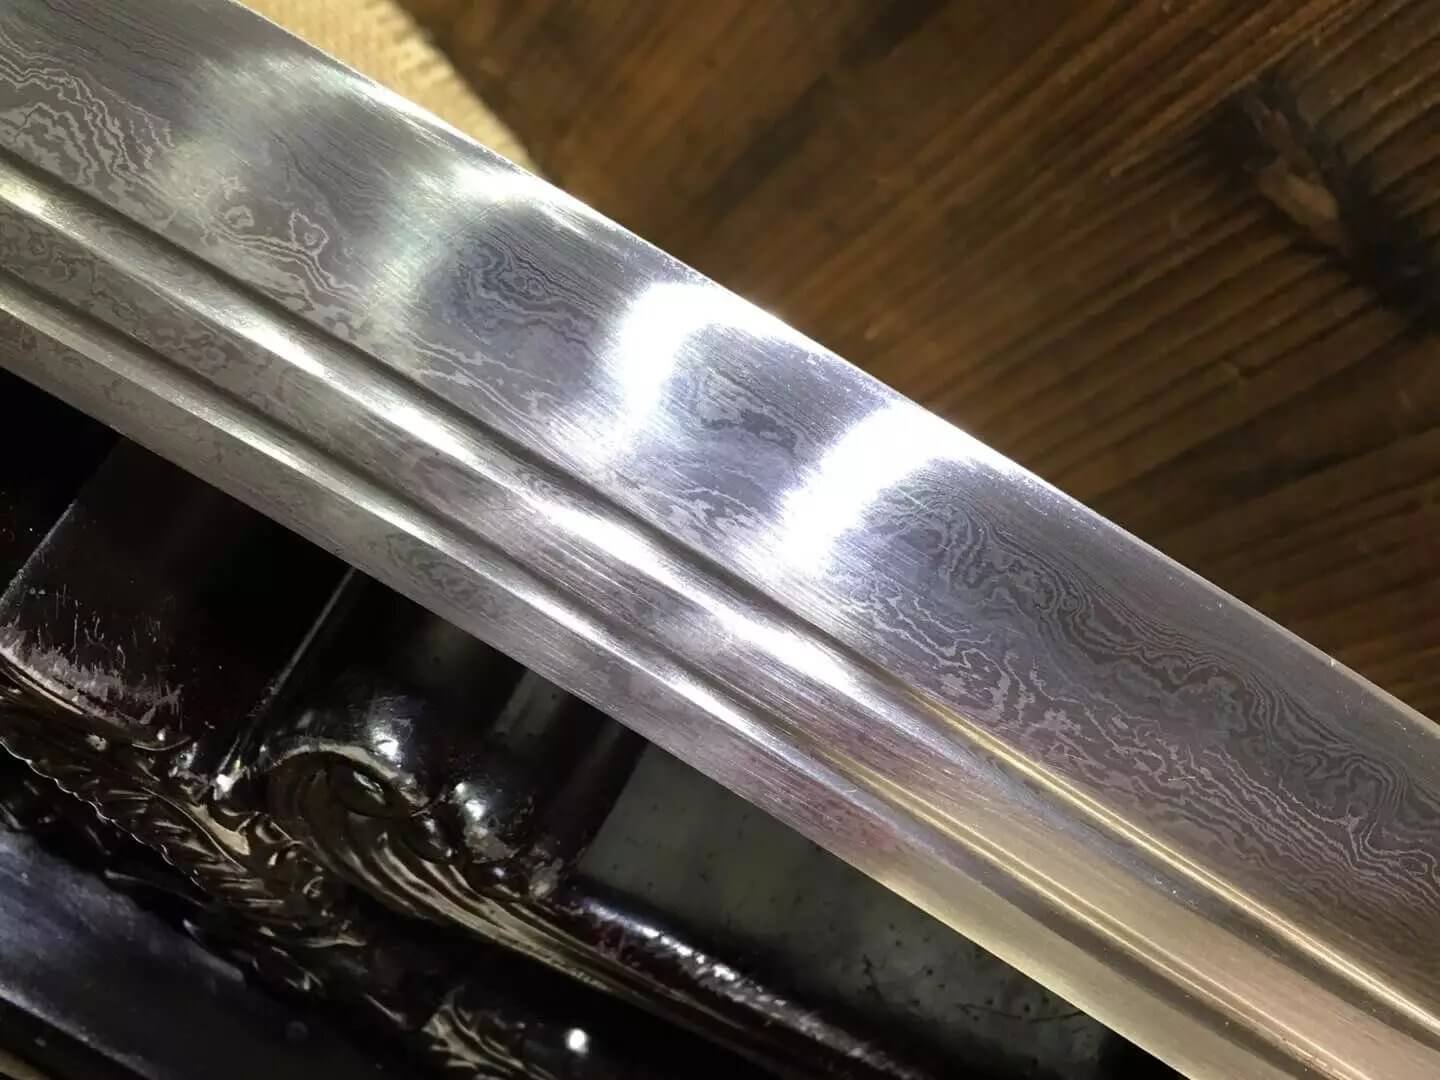 Persian sword,Damascus steel blade,Ebony scabbard,Length 20 inch - Chinese sword shop